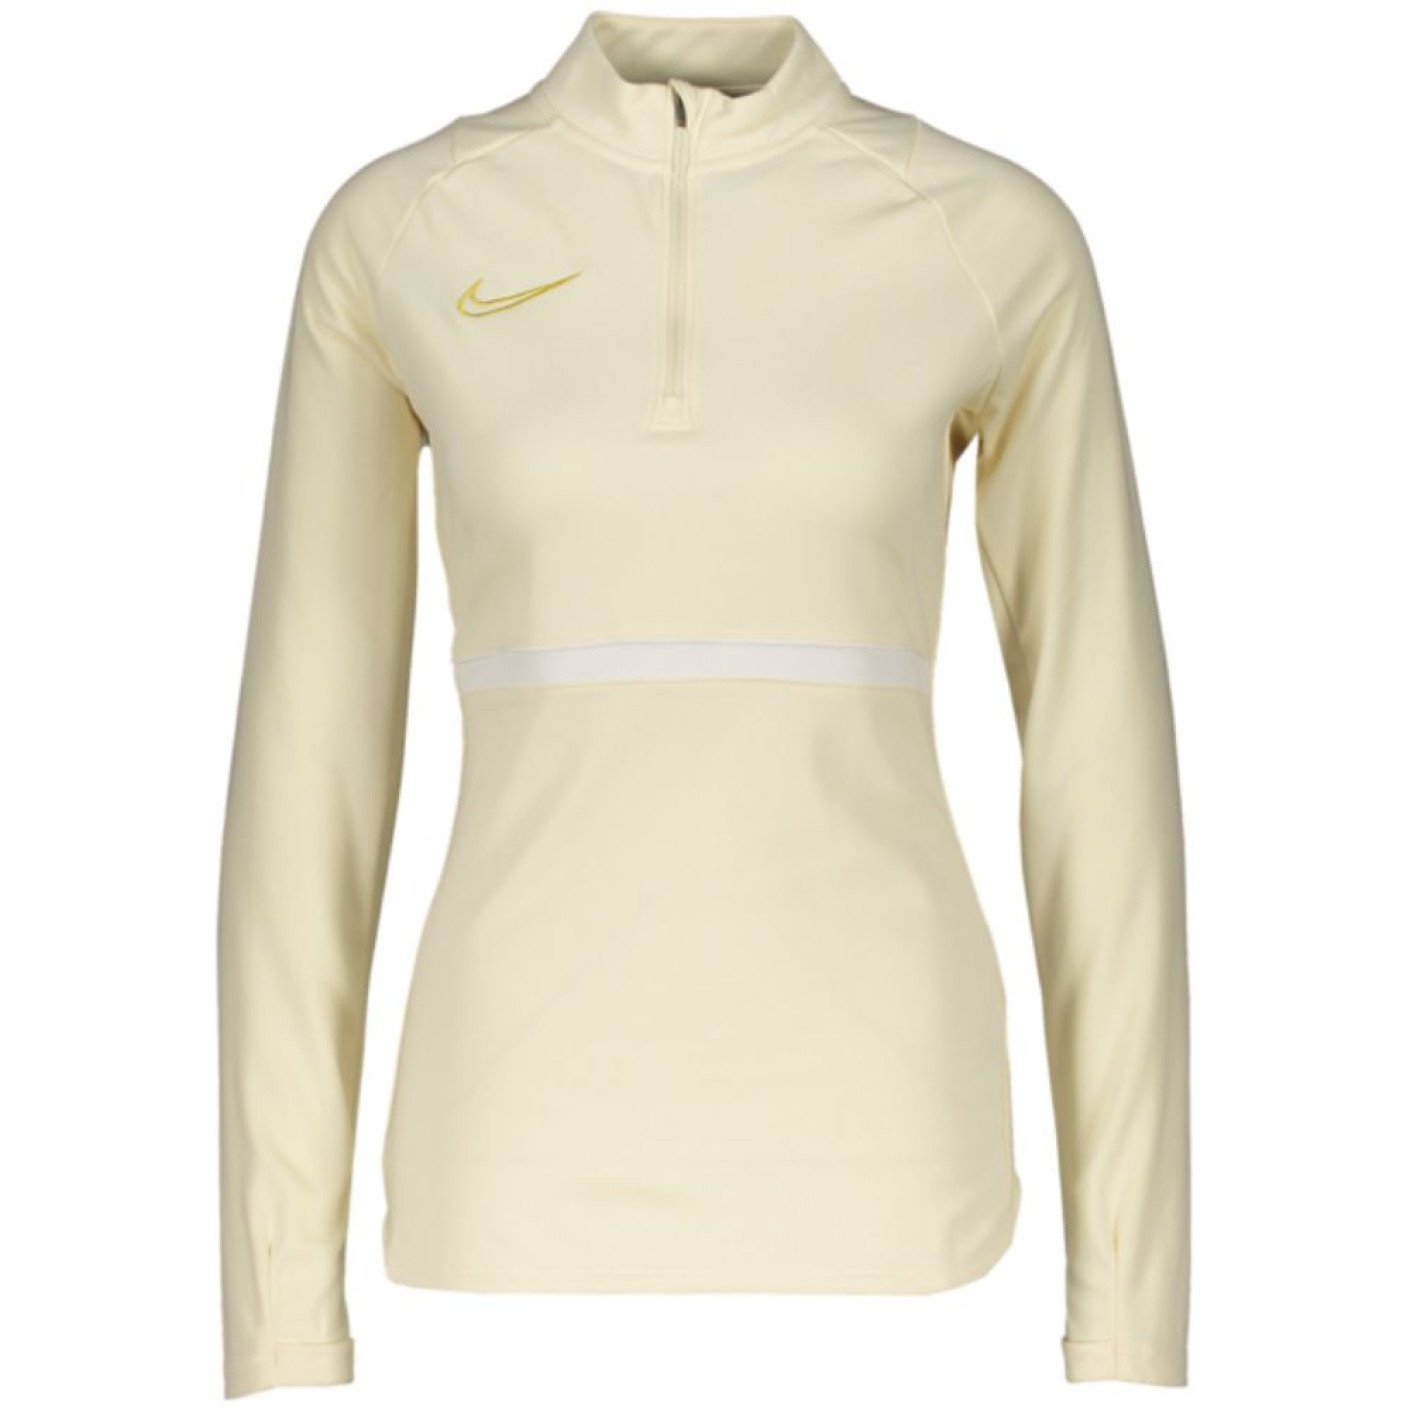 Nike Academy 21 Drill Training Top Women Beige White Gold